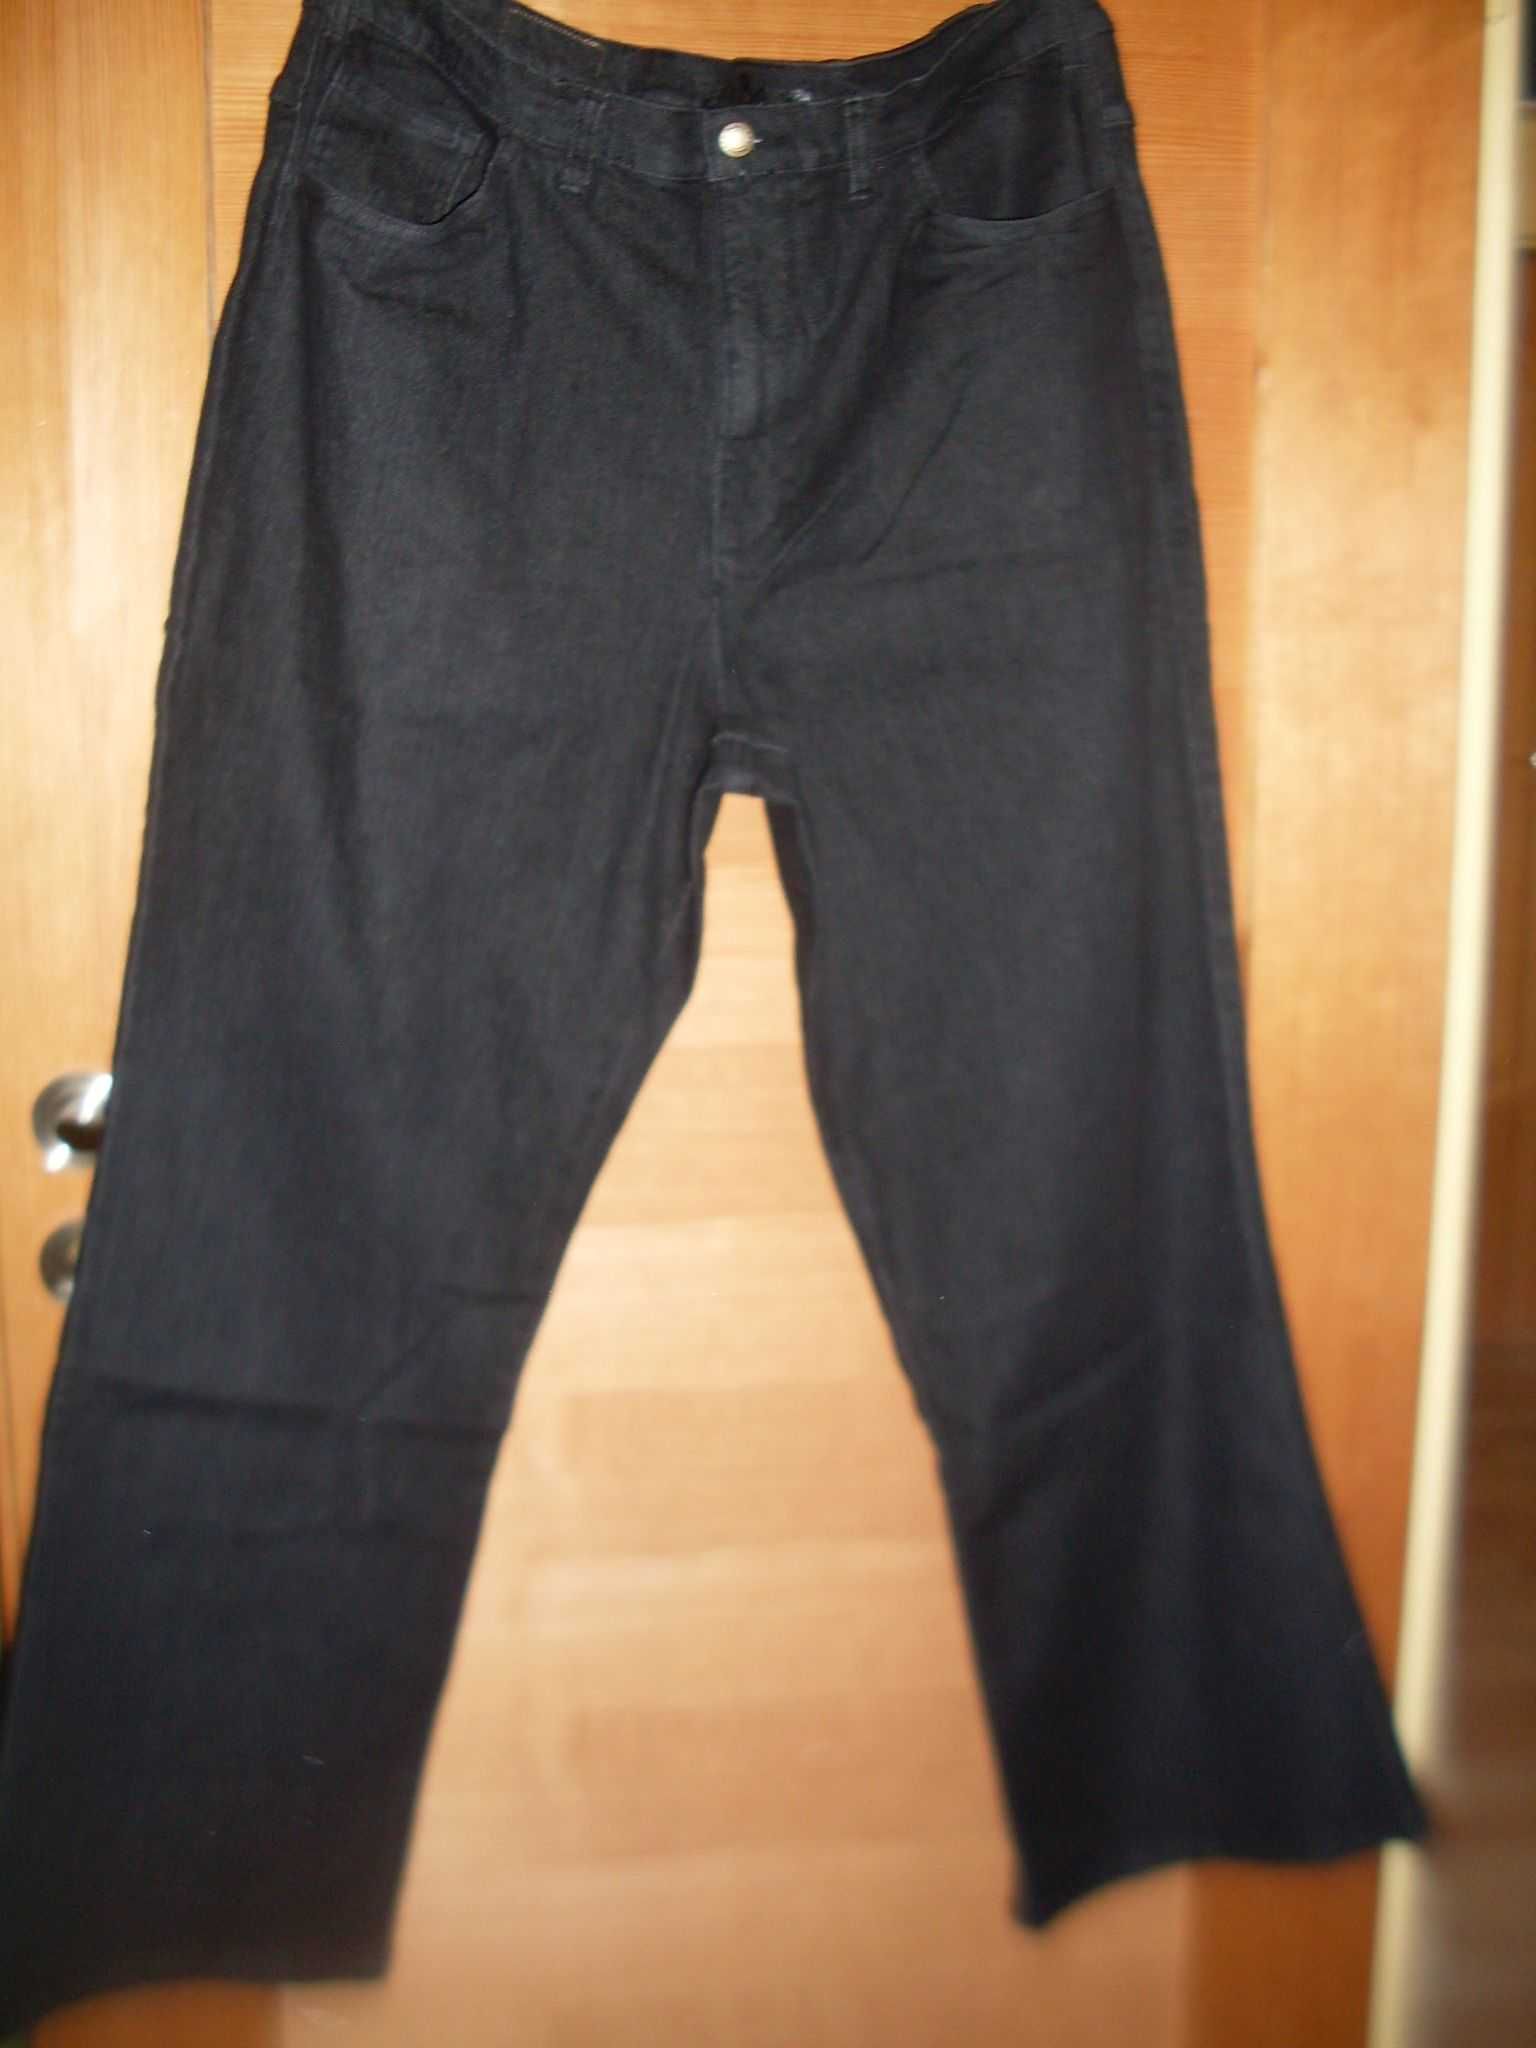 Dżinsy czarne jeansy spodnie 50 John Baner